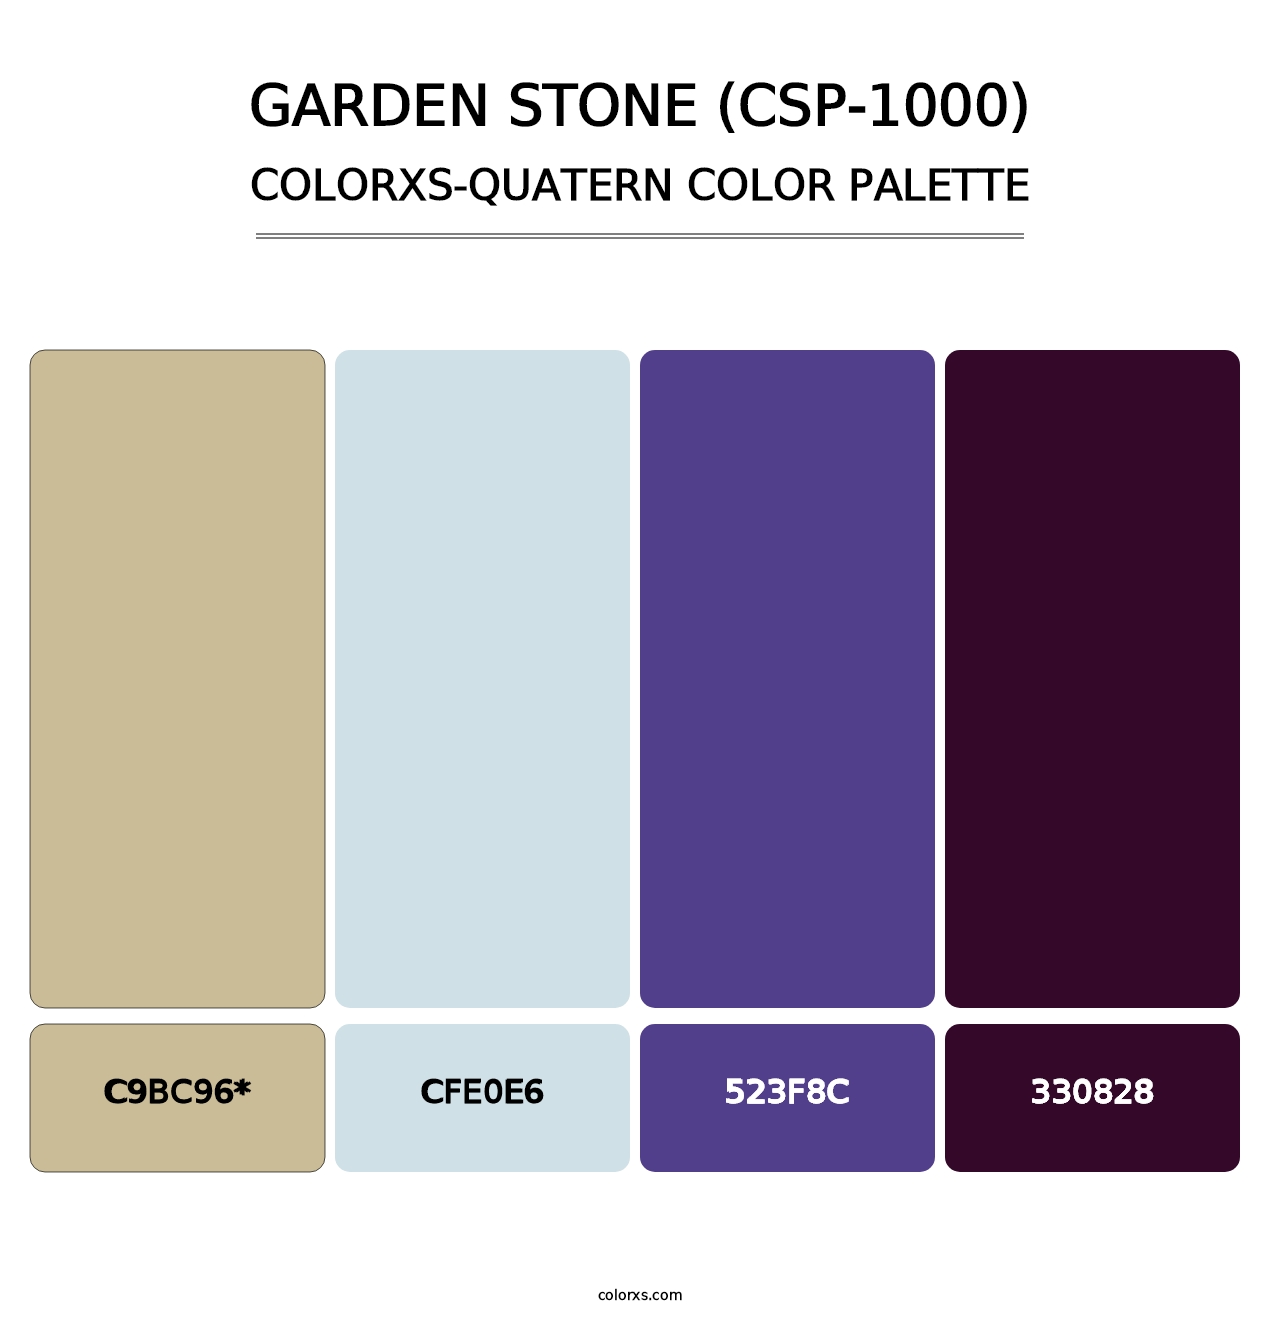 Garden Stone (CSP-1000) - Colorxs Quatern Palette